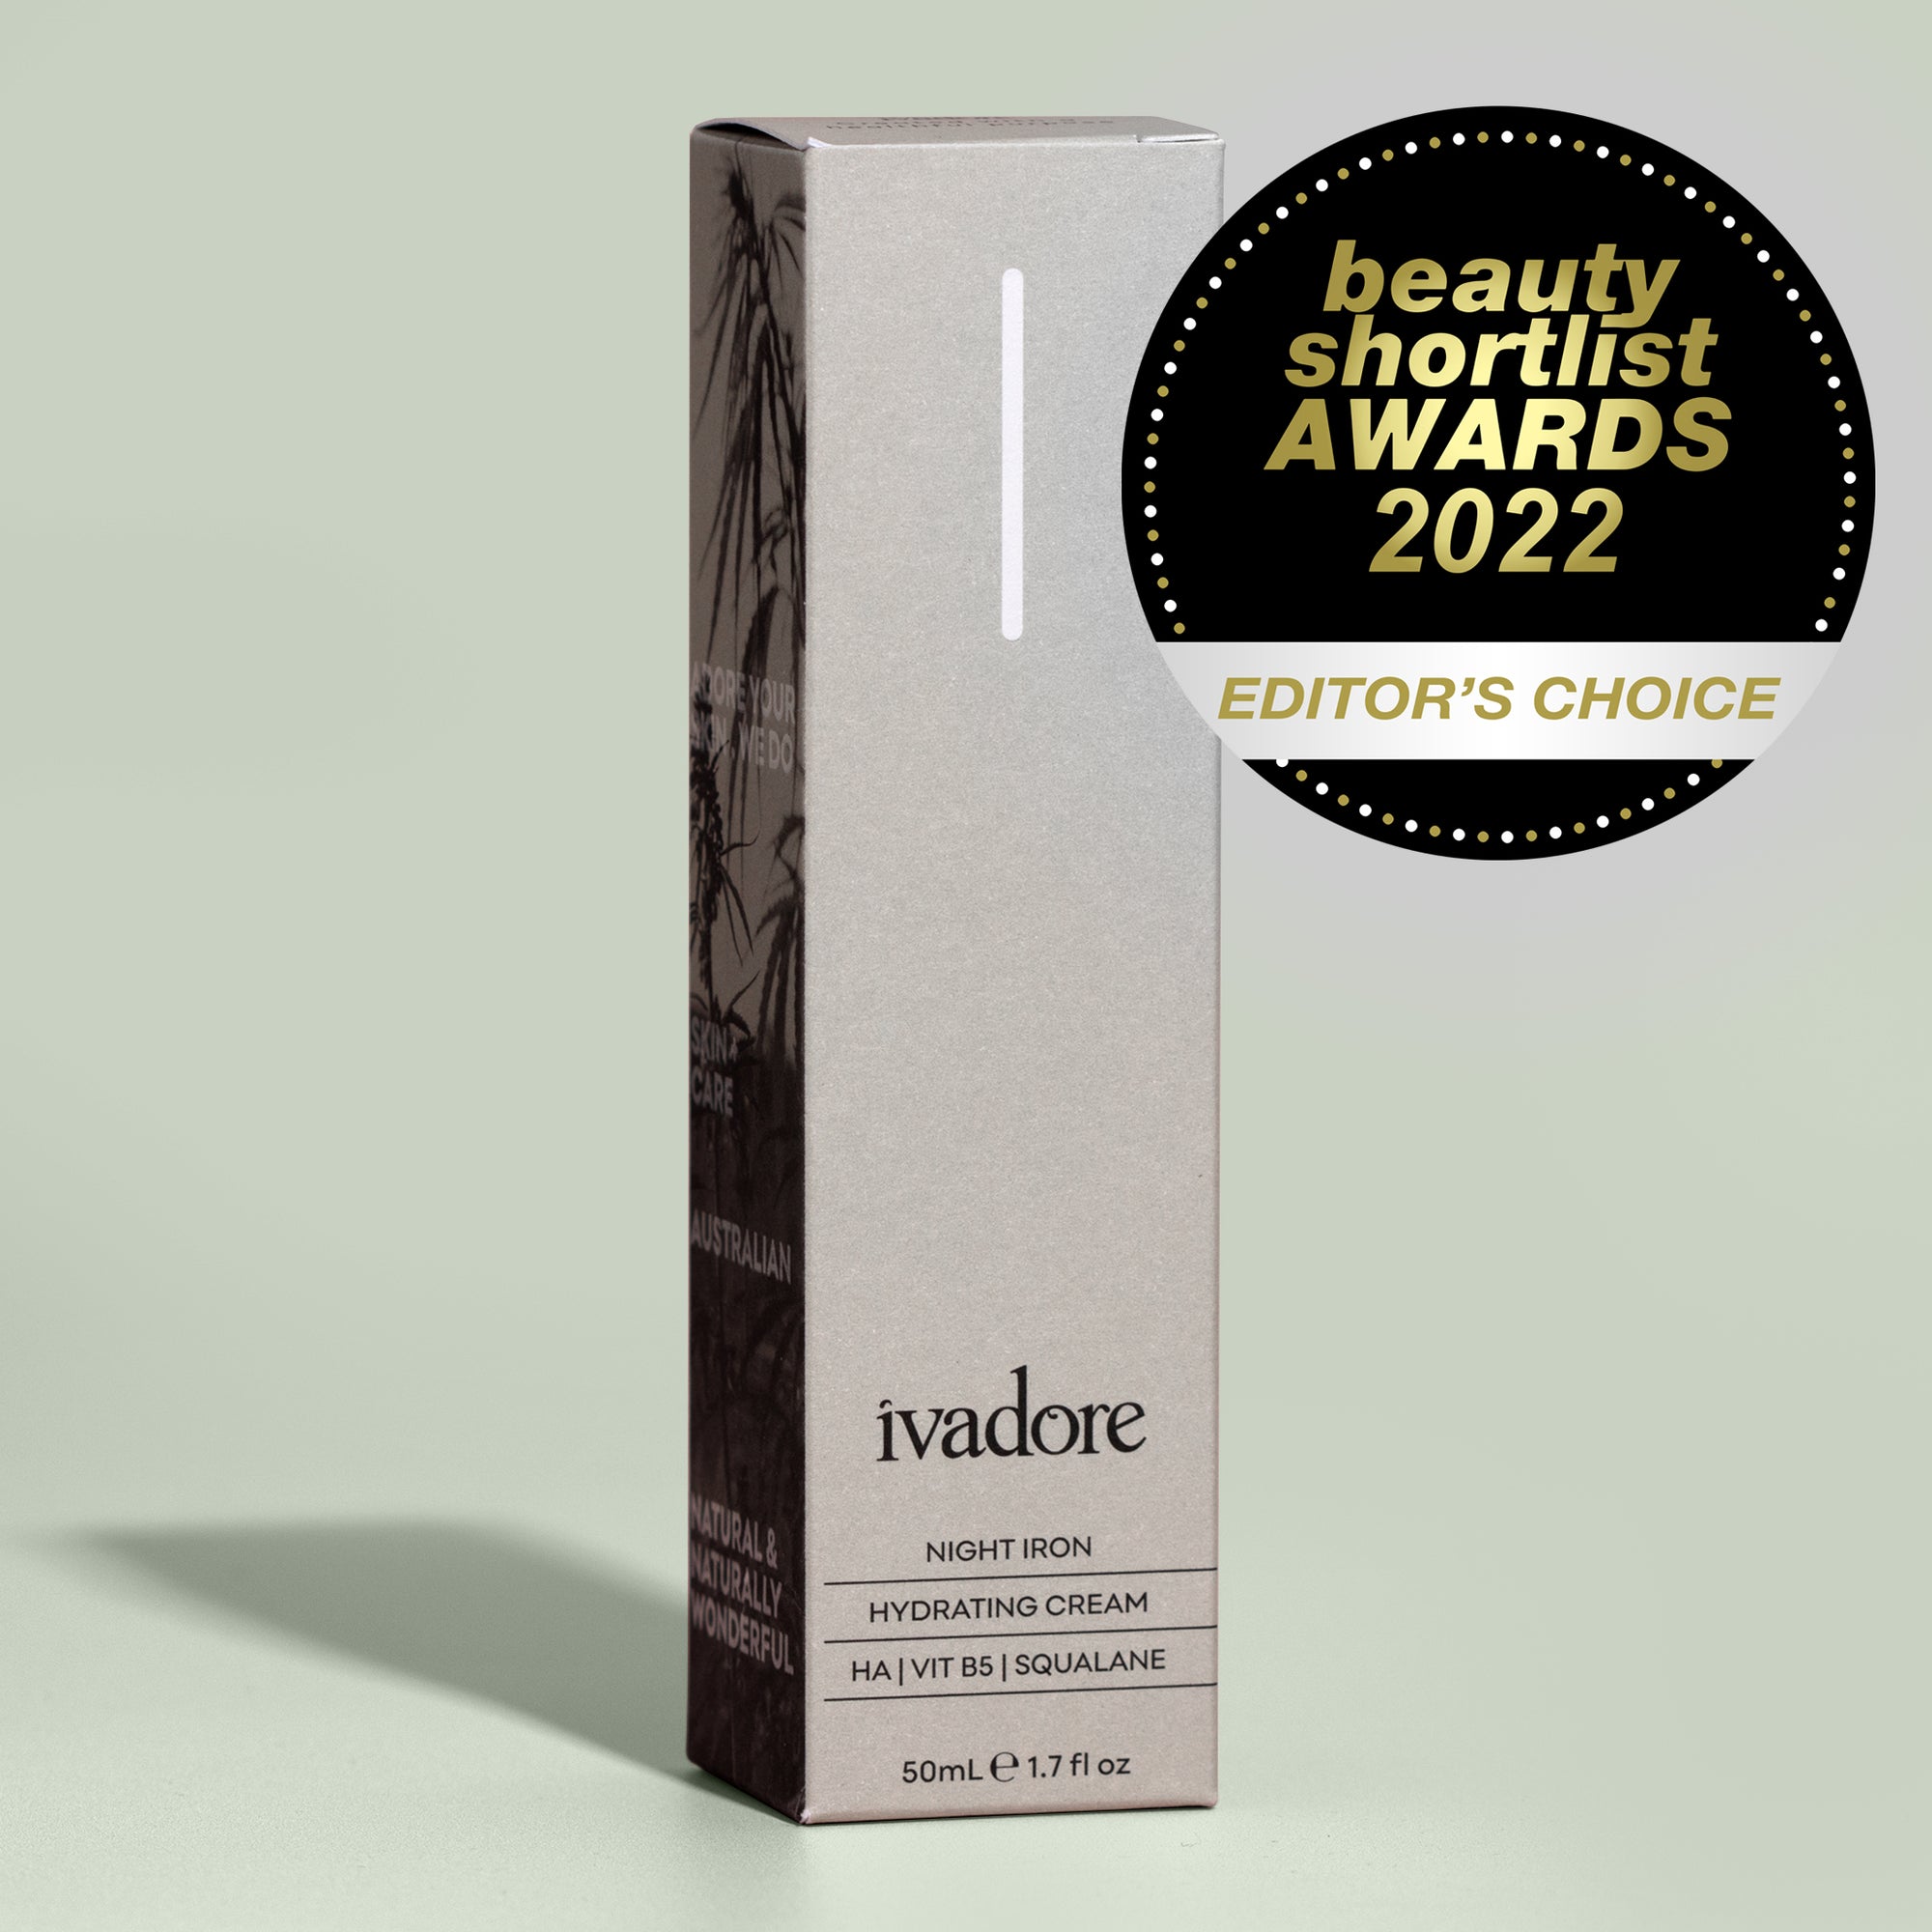 Night Iron retail box on eucalyptus coloured background with beauty shortlist awards 2022 rosette